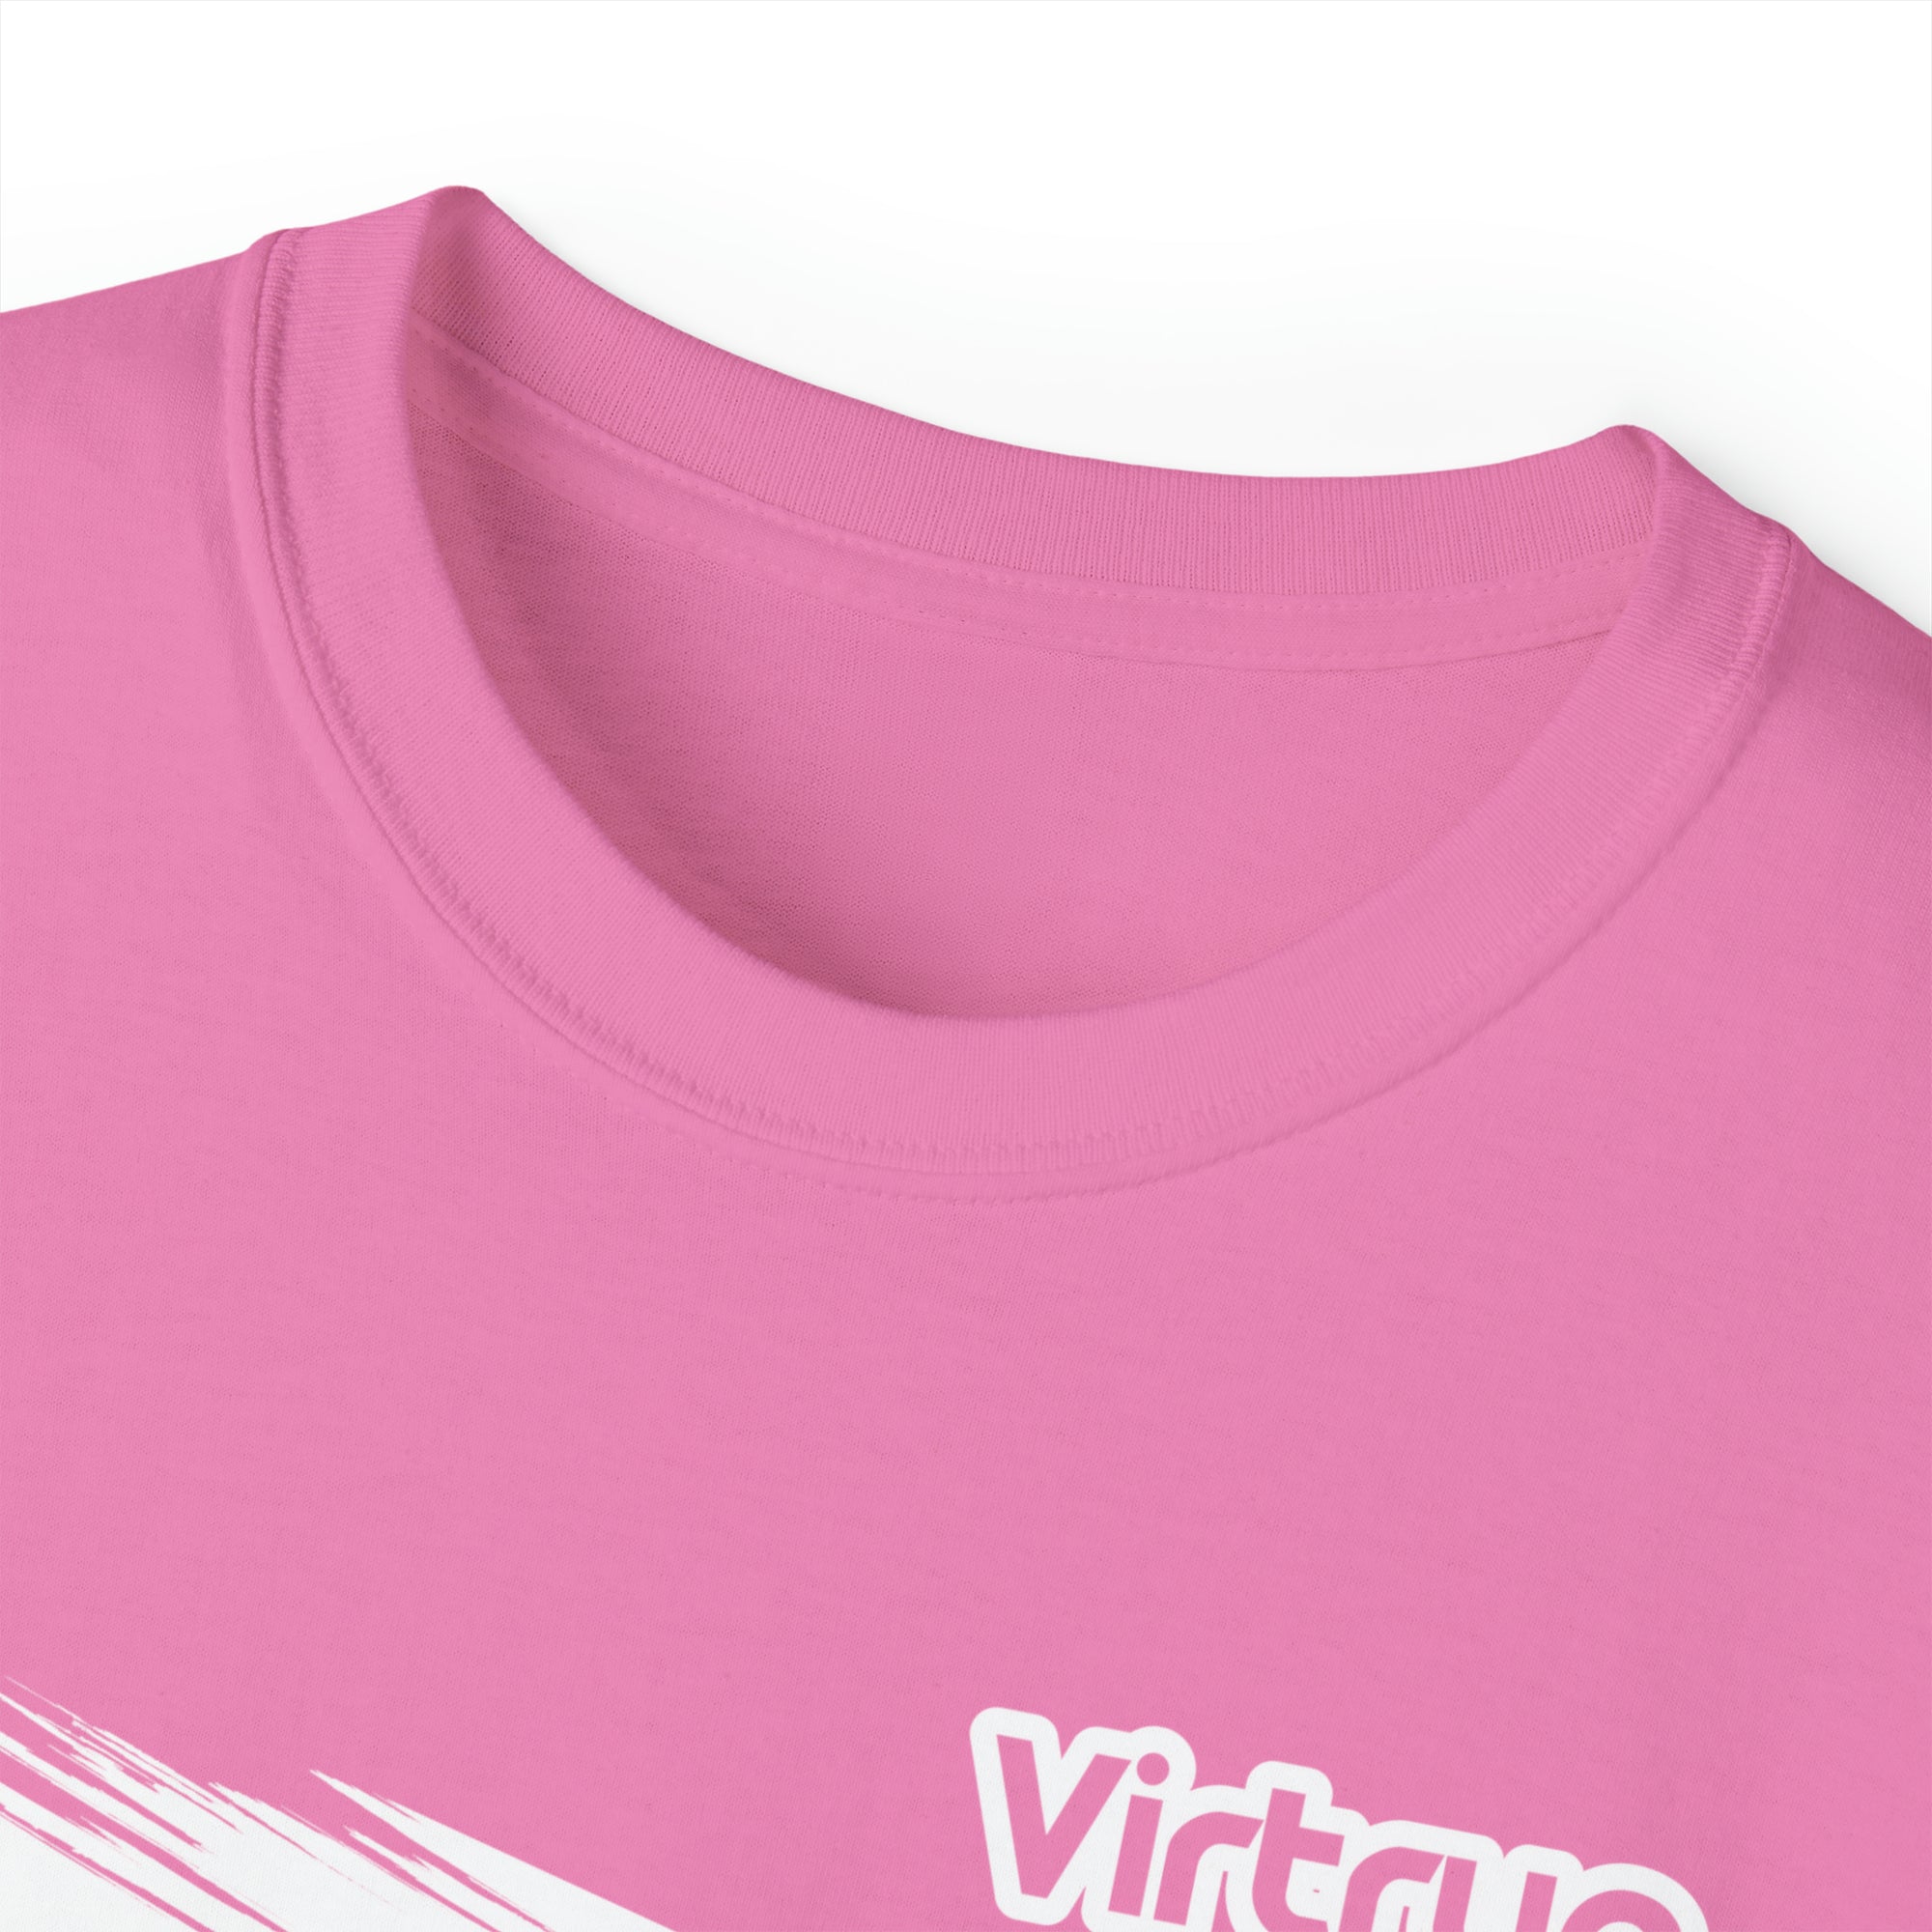 Virtrue "Hope" Unisex Breast Cancer Fundraiser Shirt